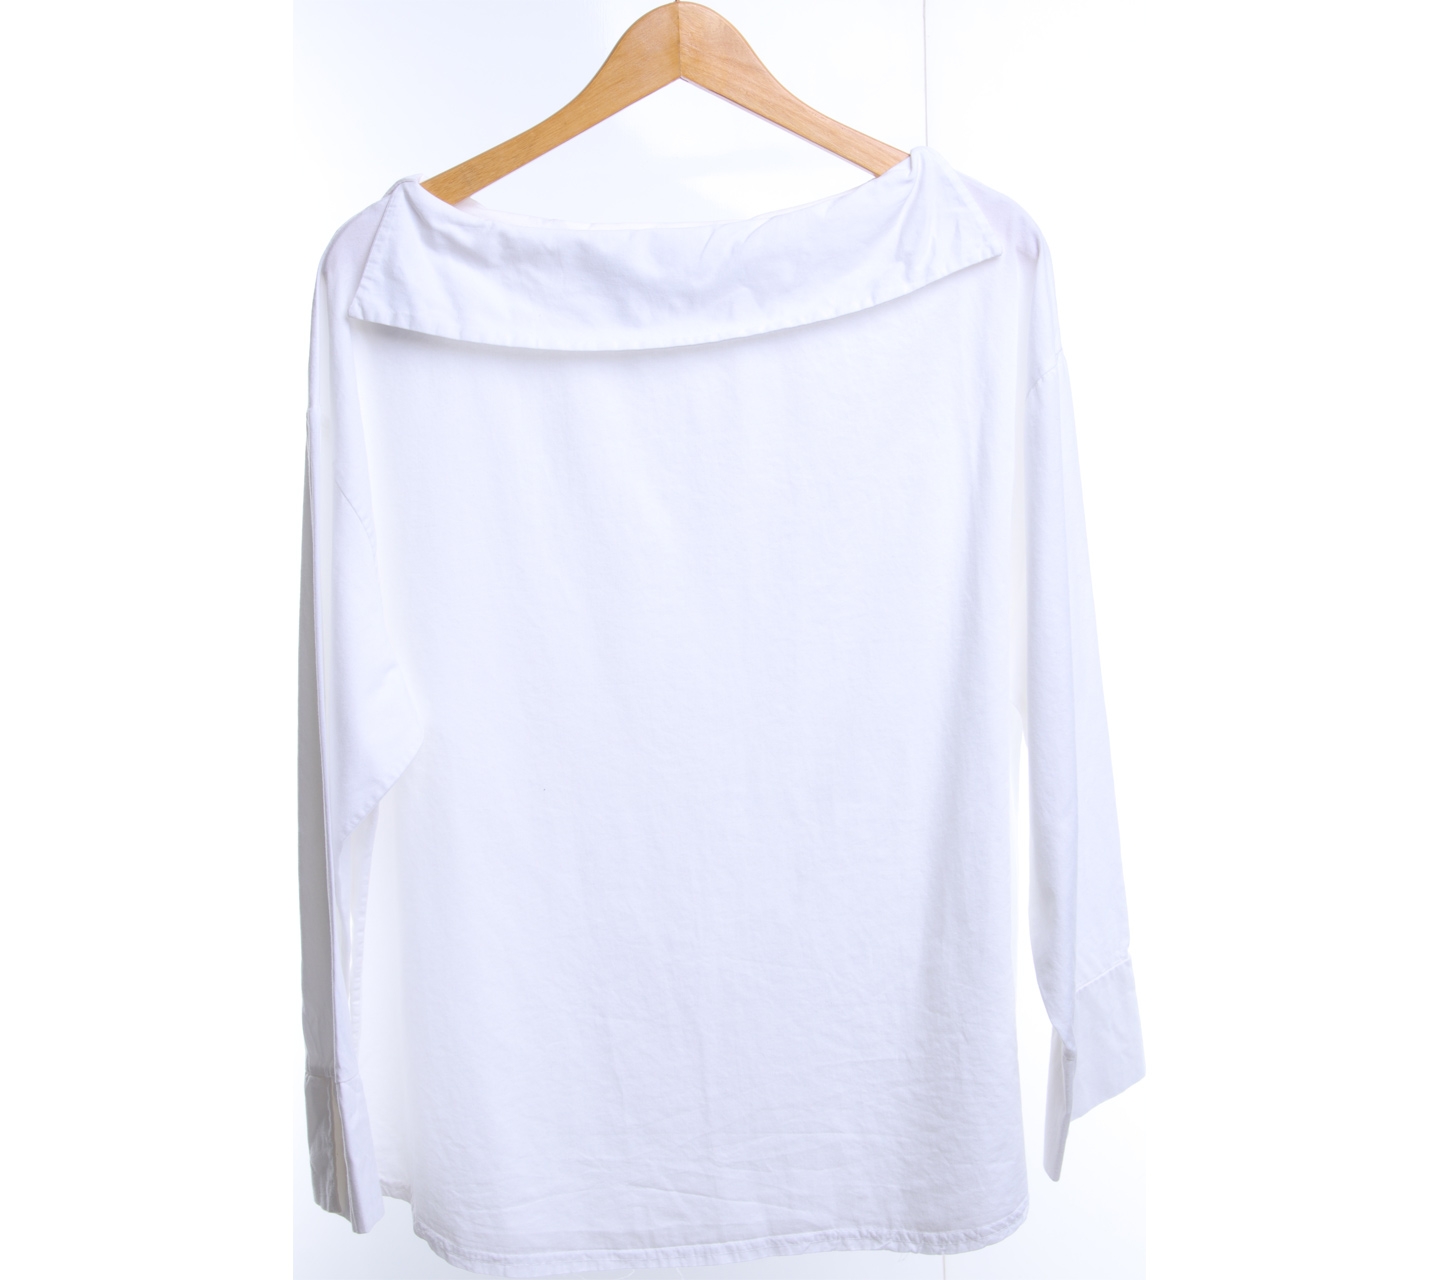 Kuki Style White Cotton long sleeve Blouse